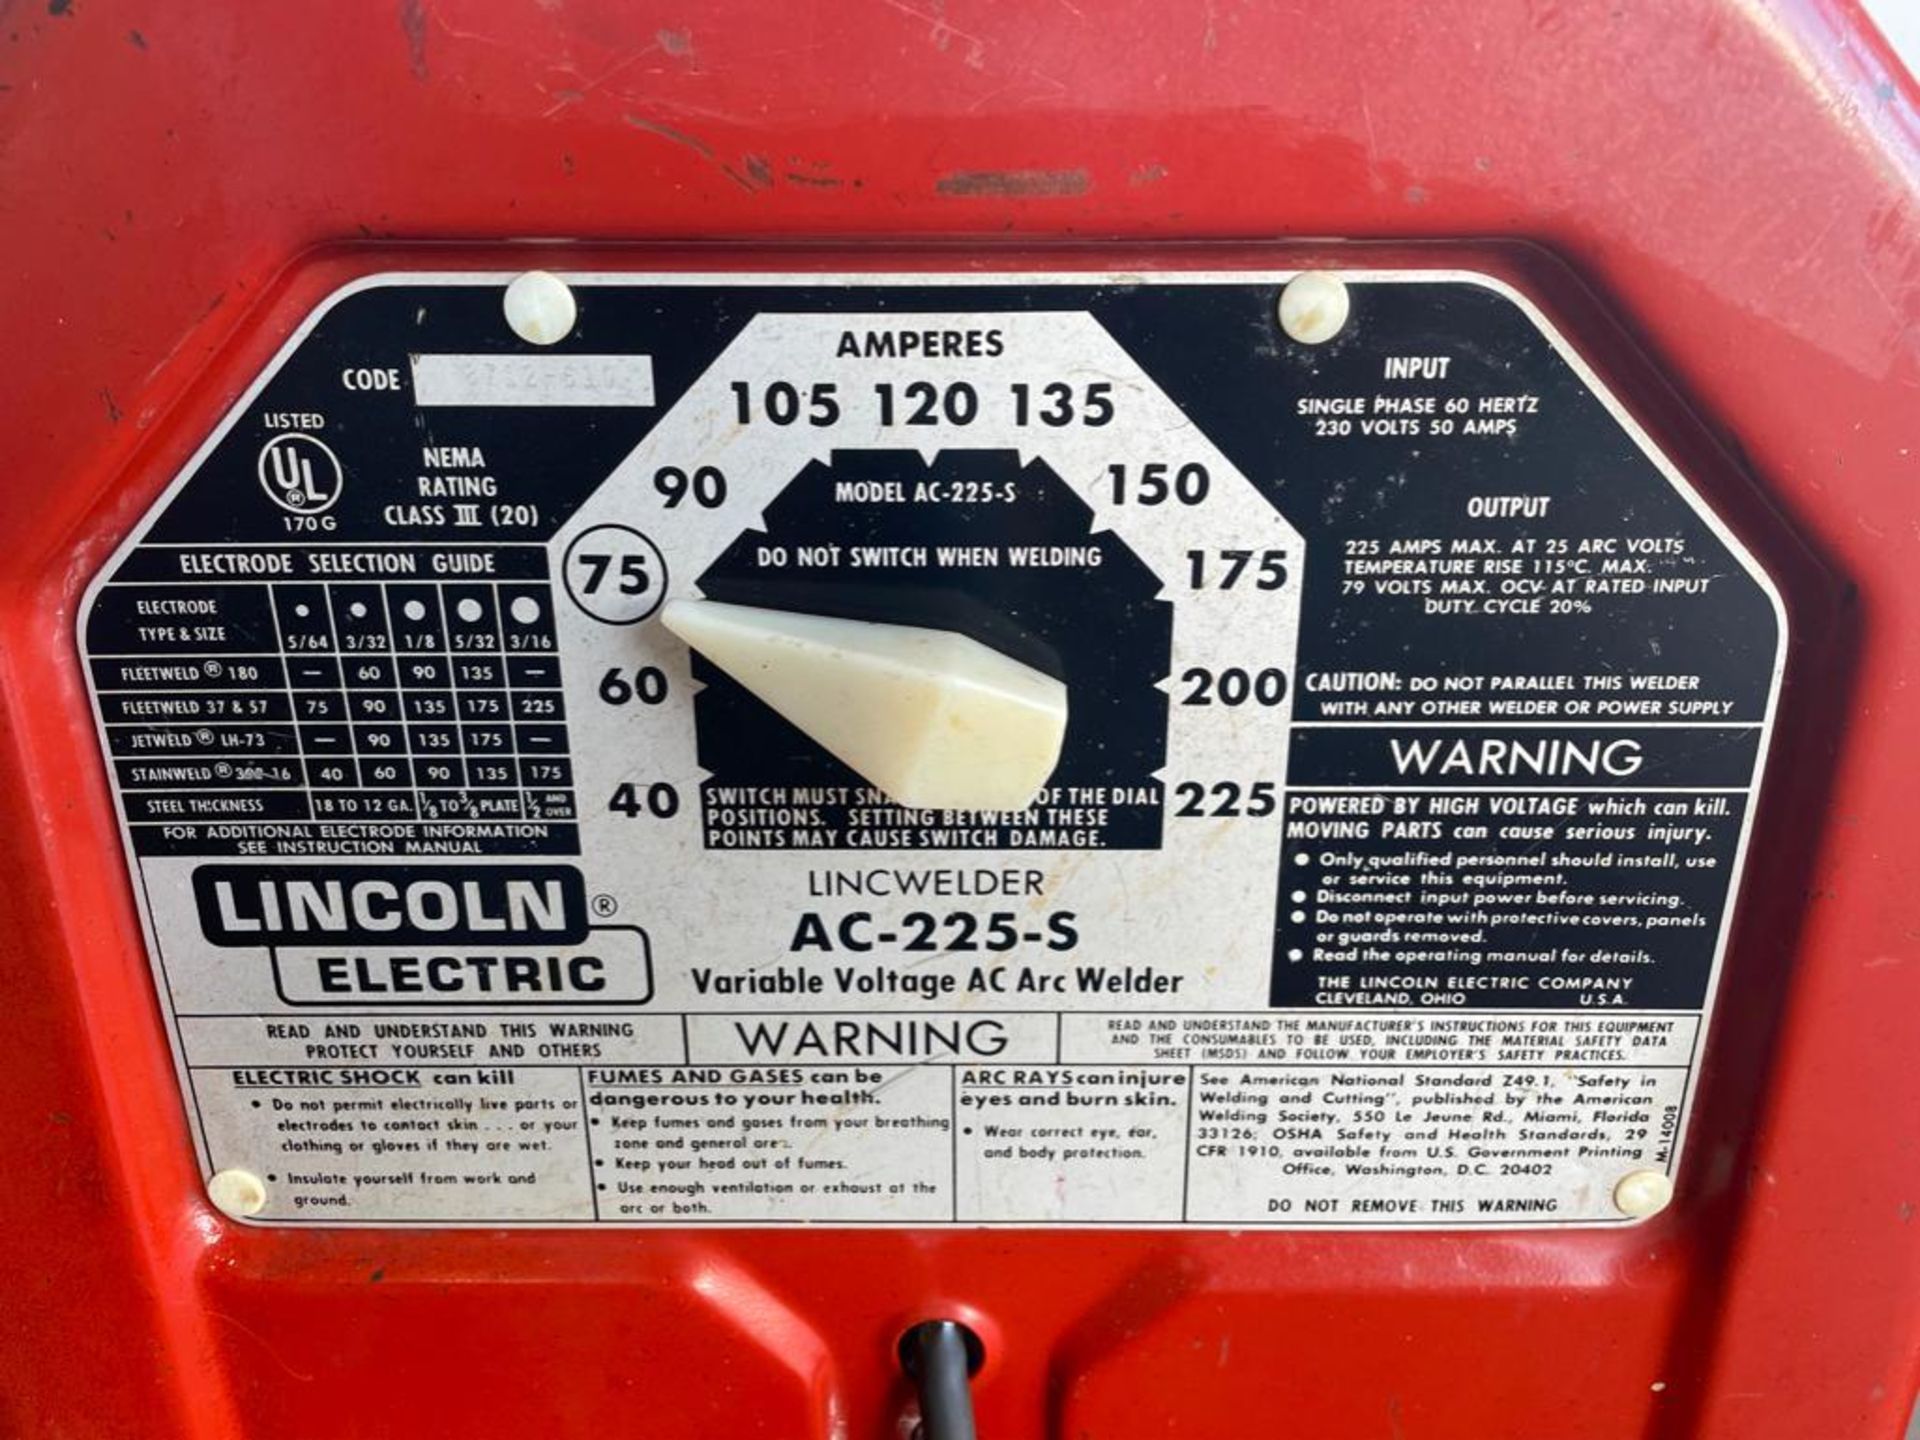 Lincoln Electric Lincwelder AC-225-S Variable Voltage AC Arc Welder, Single Phase 60 Hertz, 230 Volt - Image 6 of 6